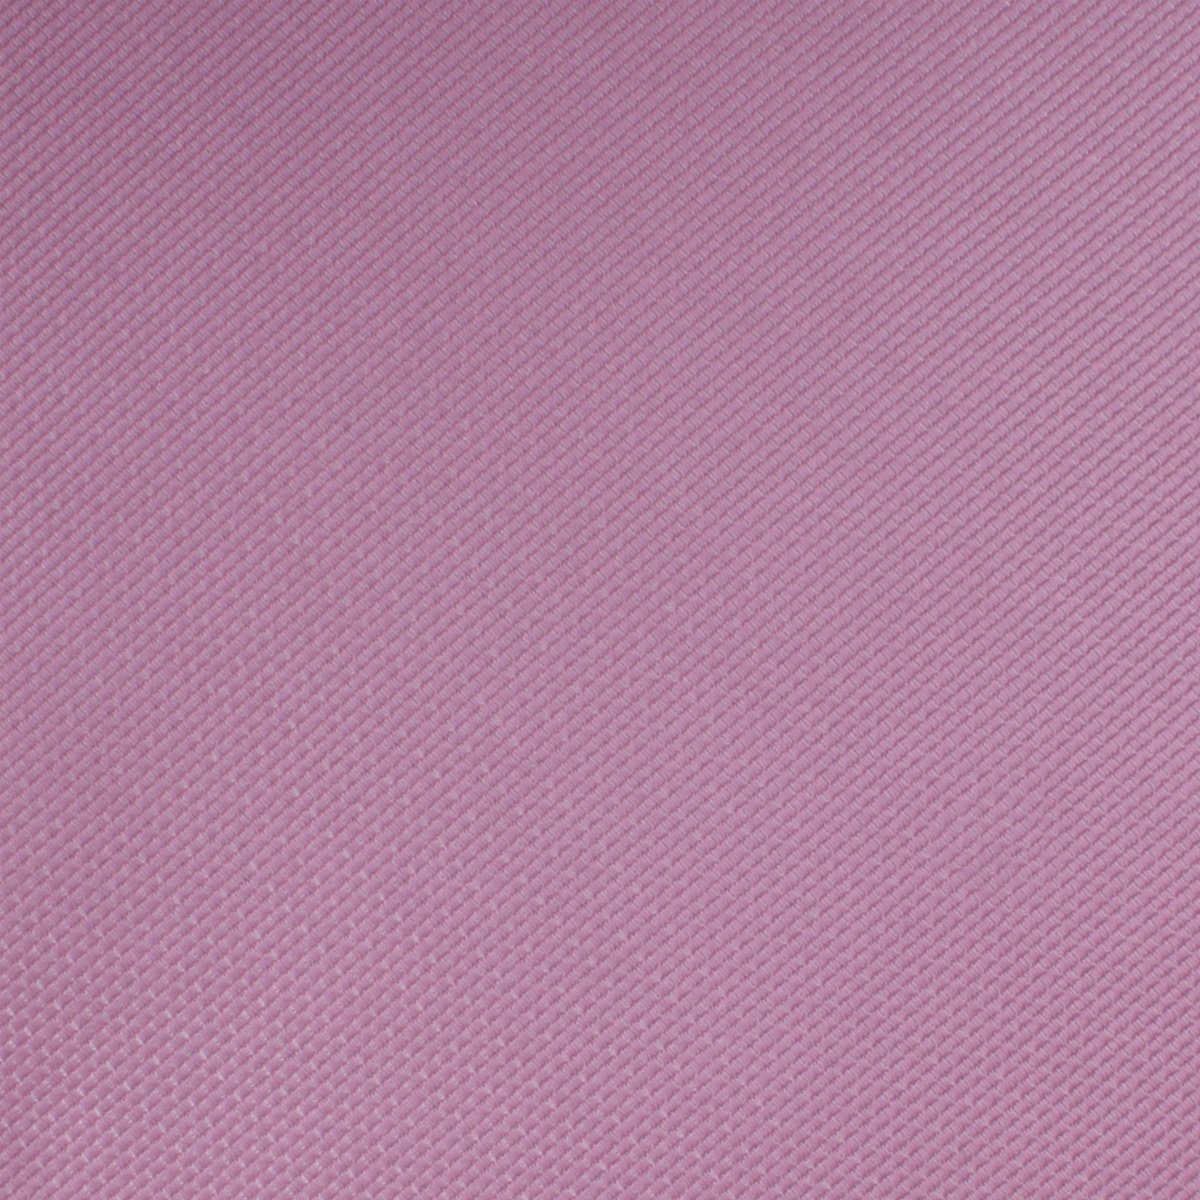 Deep Wisteria Purple Weave Bow Tie Fabric